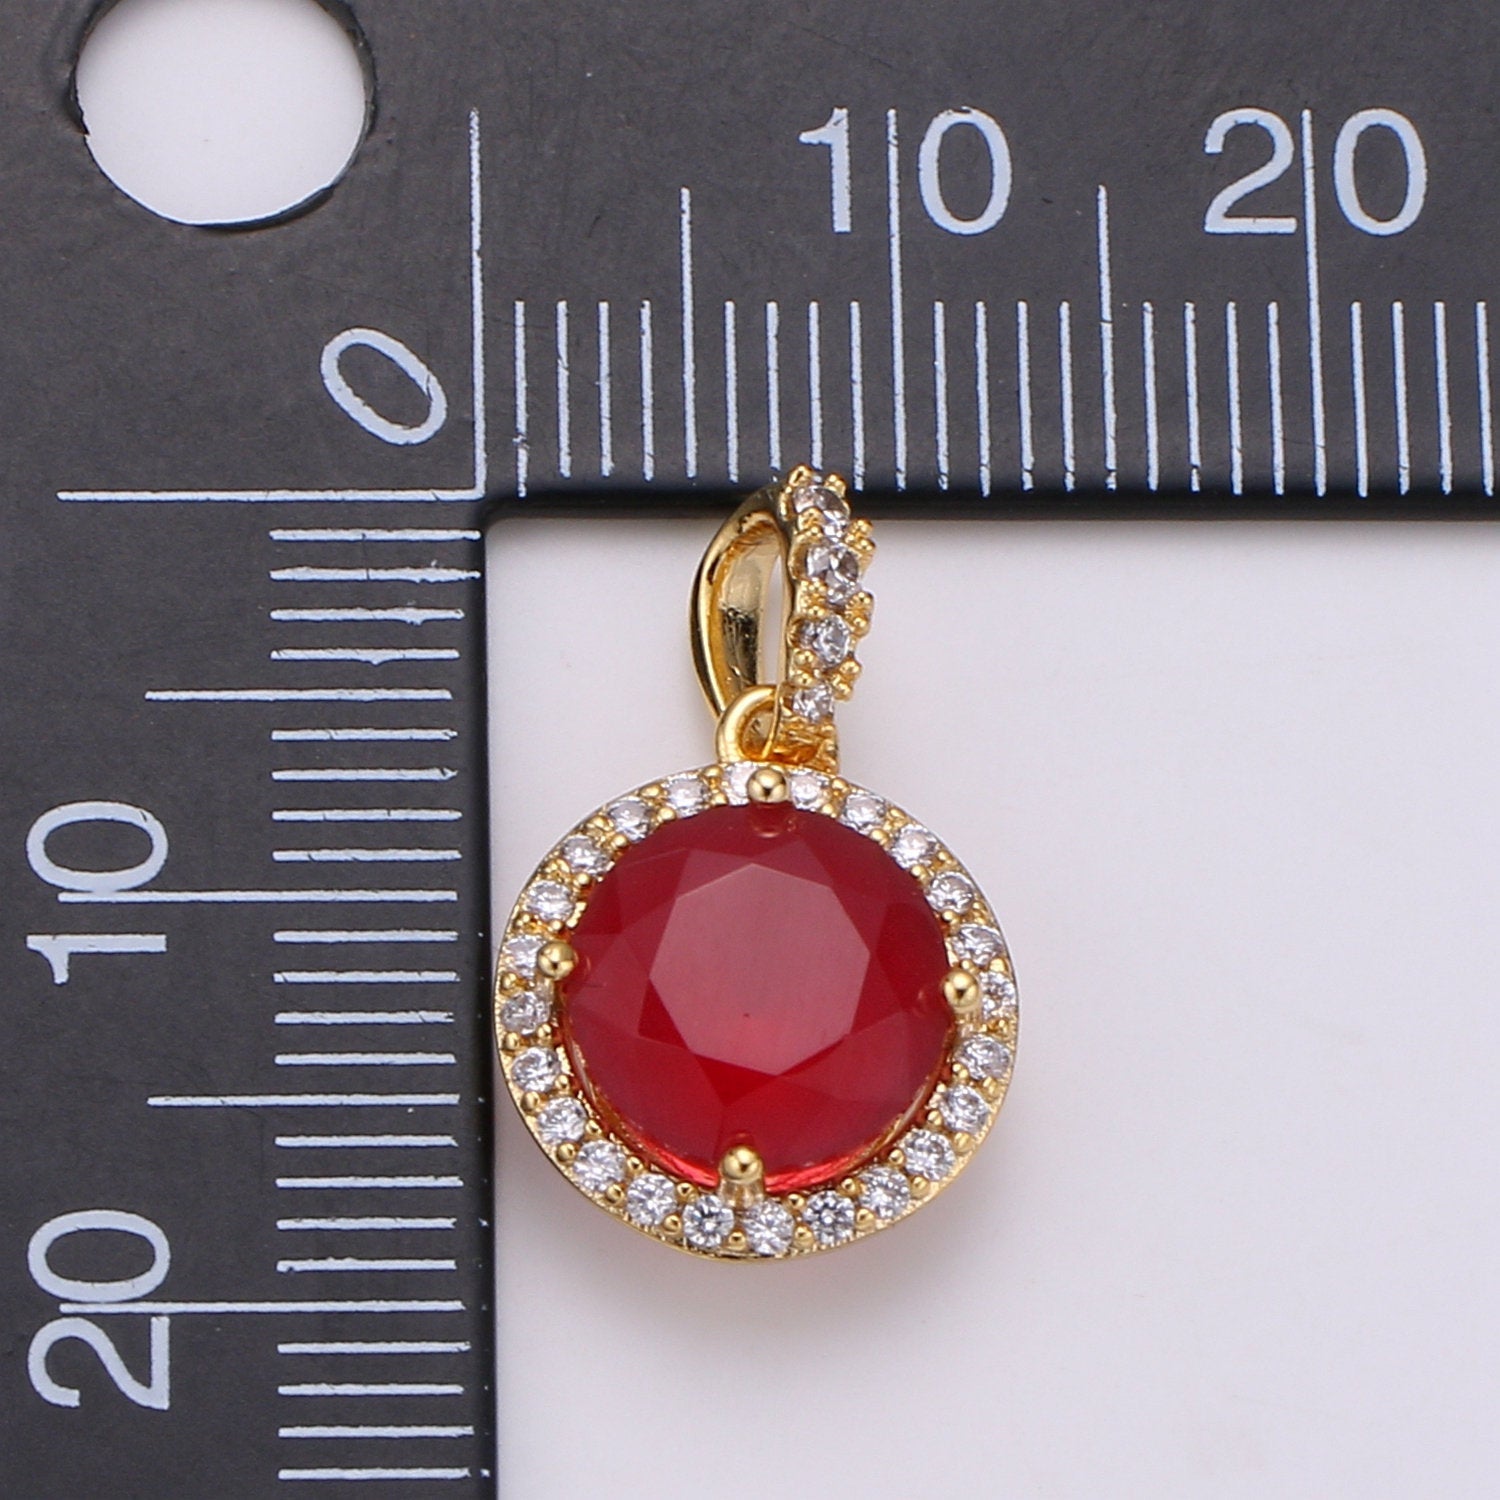 12mm Red Garnet Charm - 24k Gold Filled Charm 19mm x 11mm - Gemstone Bezel Charm - Tiny Red Charm Pendant Bulk Findings Birthstone PD-1993 - DLUXCA